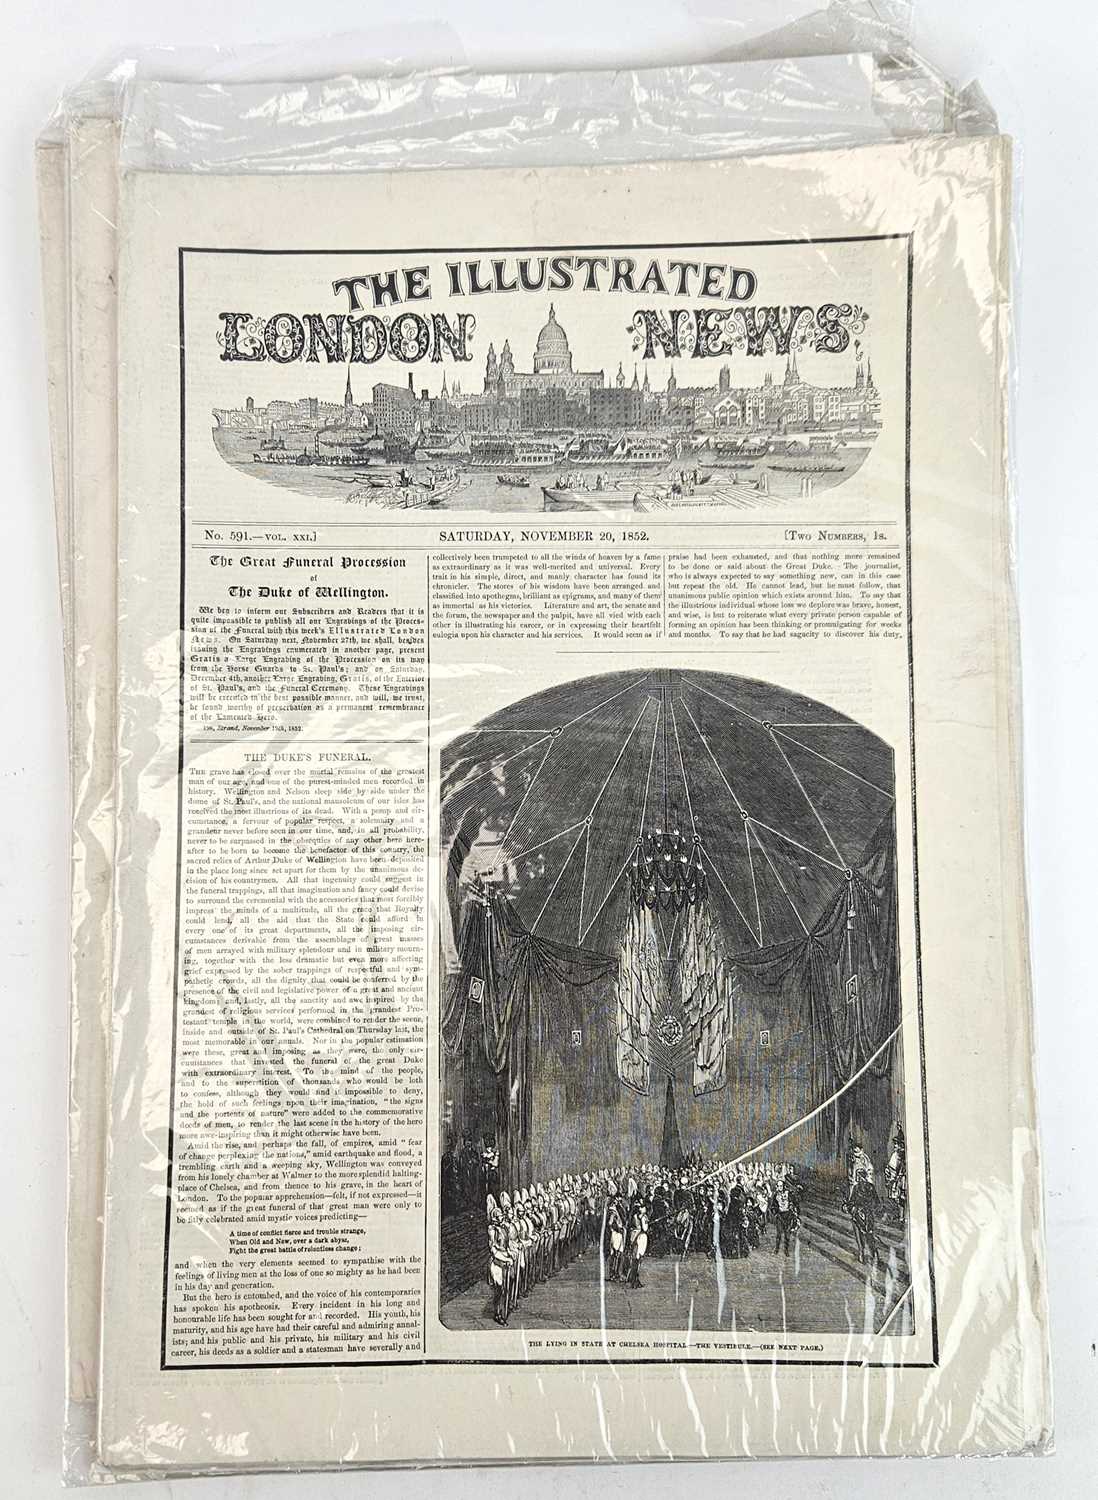 Illustrated London News - Duke of Wellington's Funeral. - Image 5 of 7